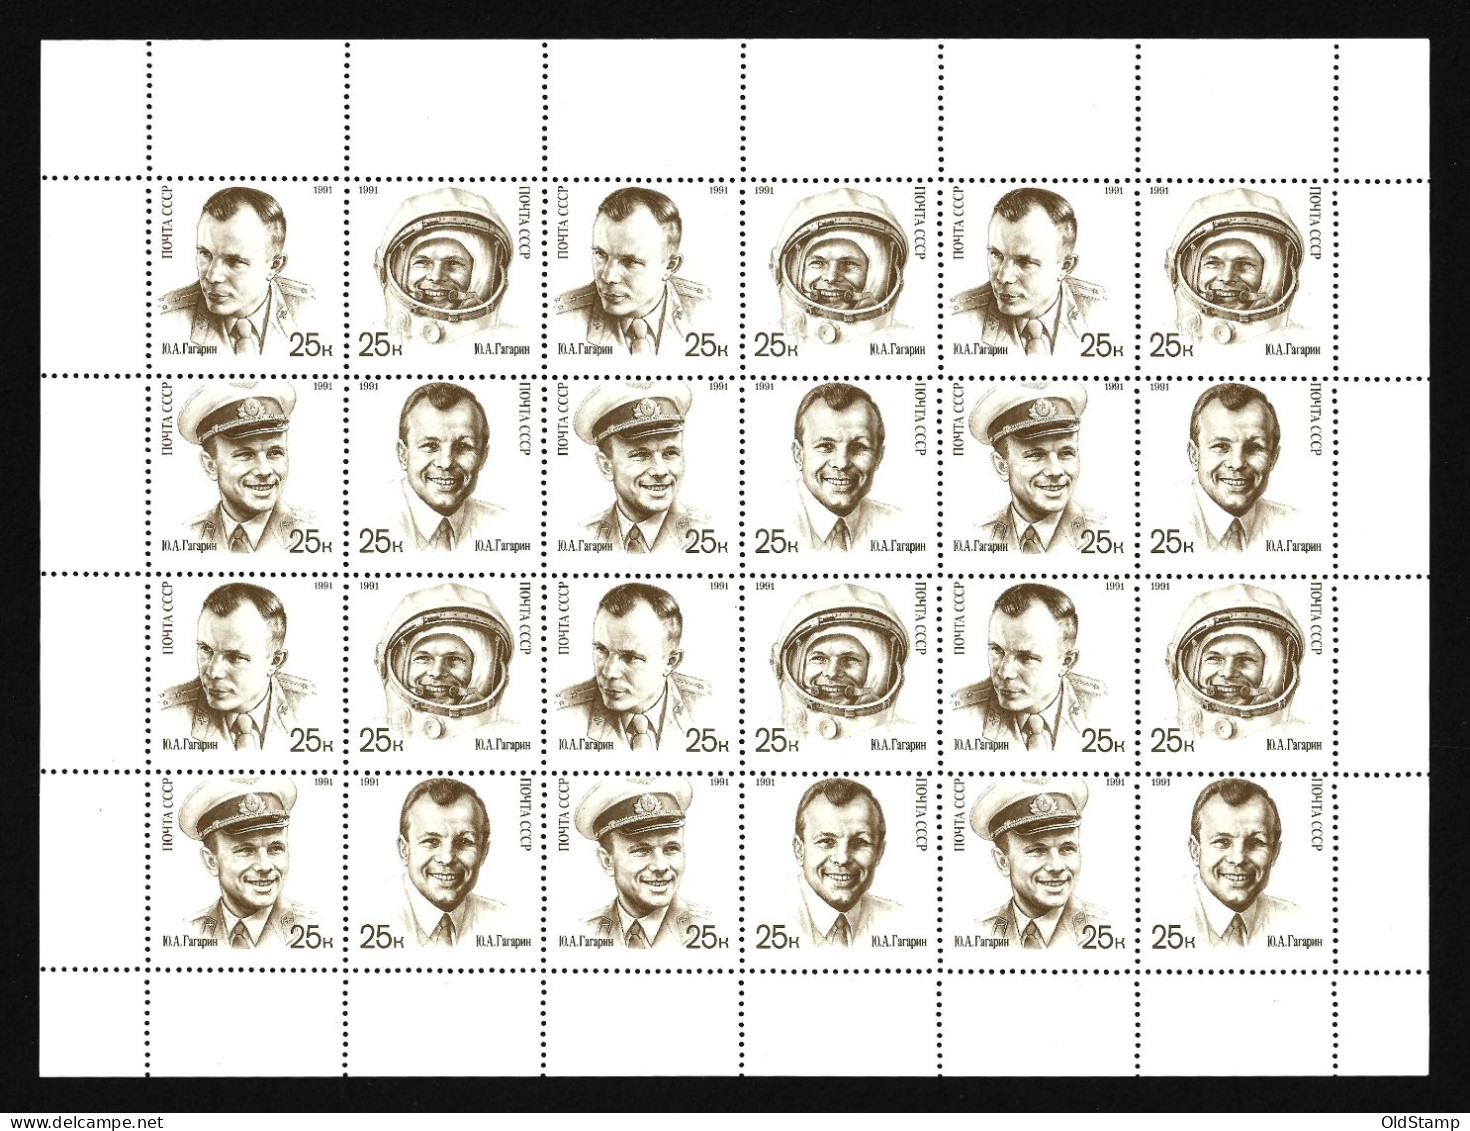 SPACE USSR Russia 1991 Full Sheet MNH Gagarin 30th Anniversary First Man In Space Cosmonautics Stamps Mi. 6185 - 6188 - Sammlungen